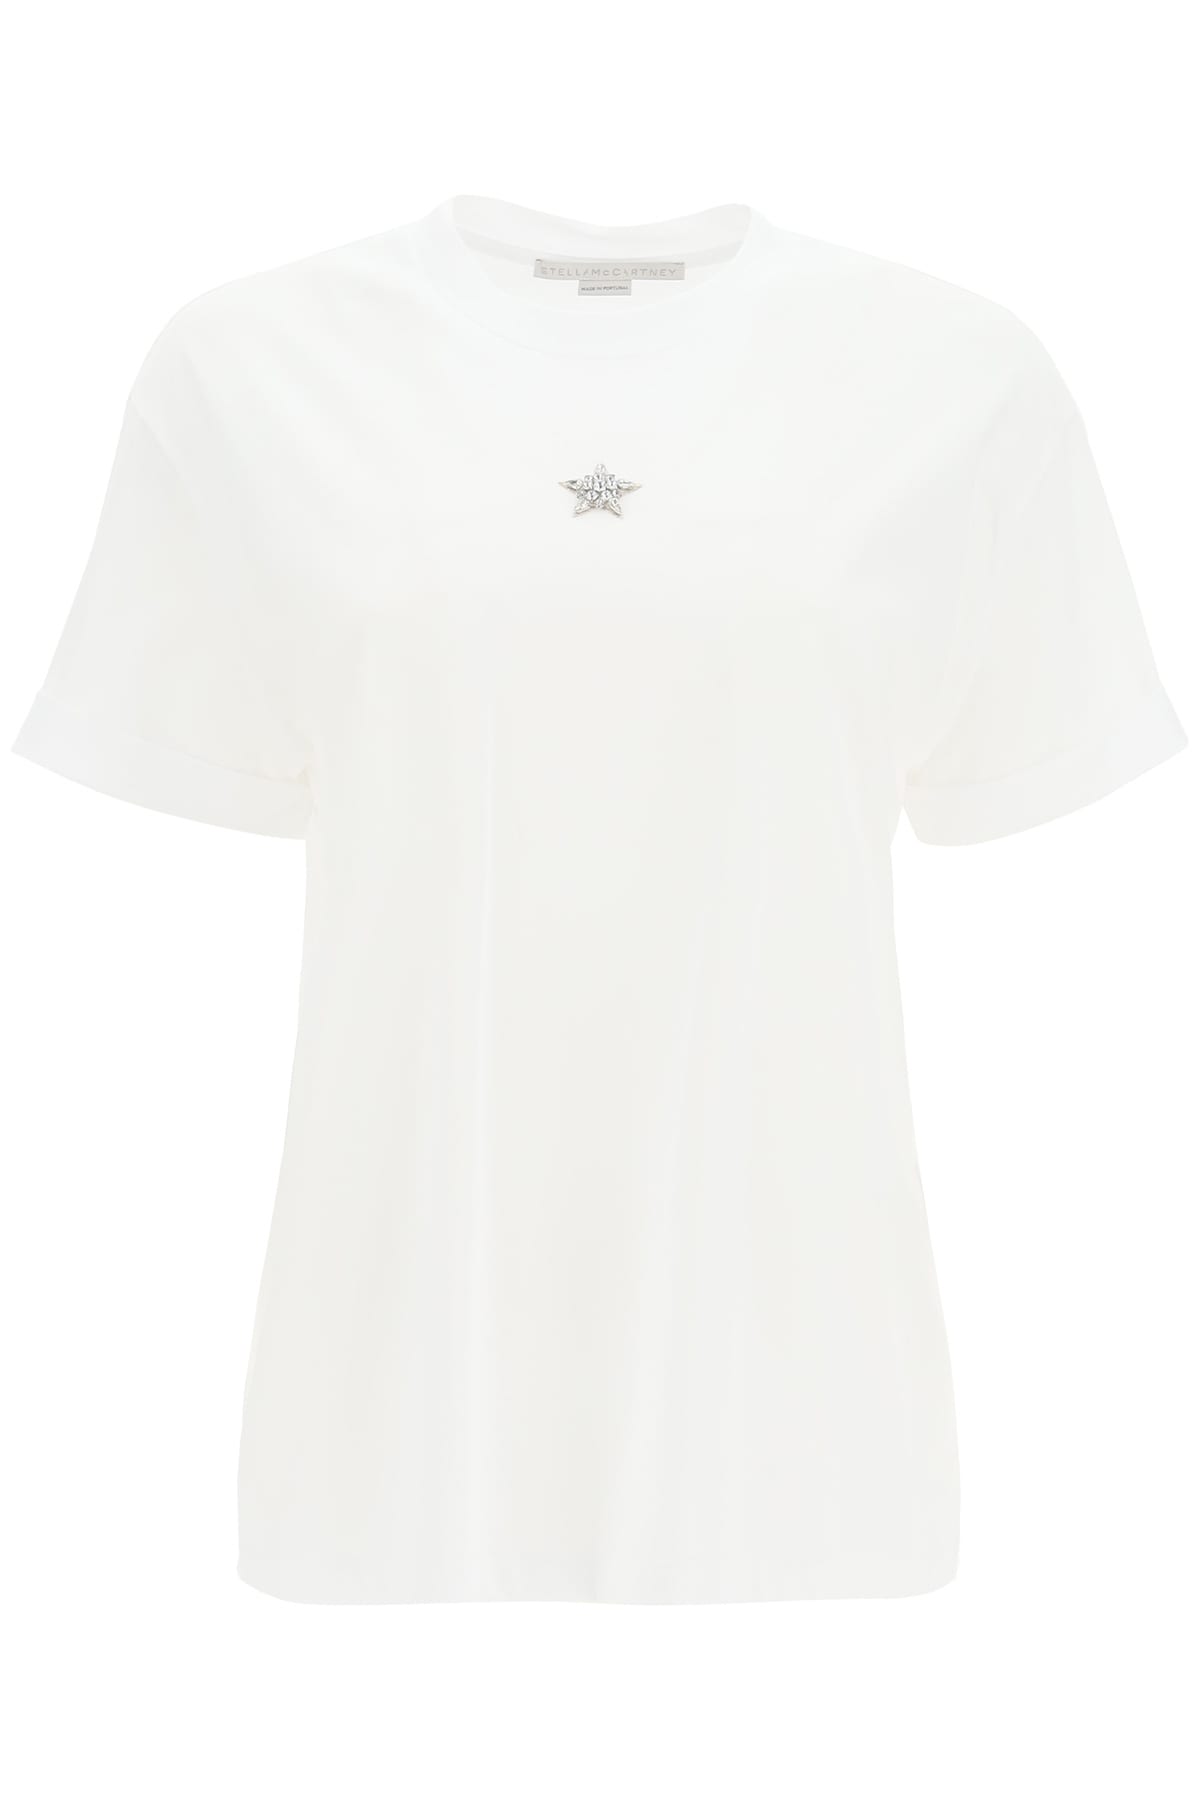 Stella McCartney Crystal Star T-shirt